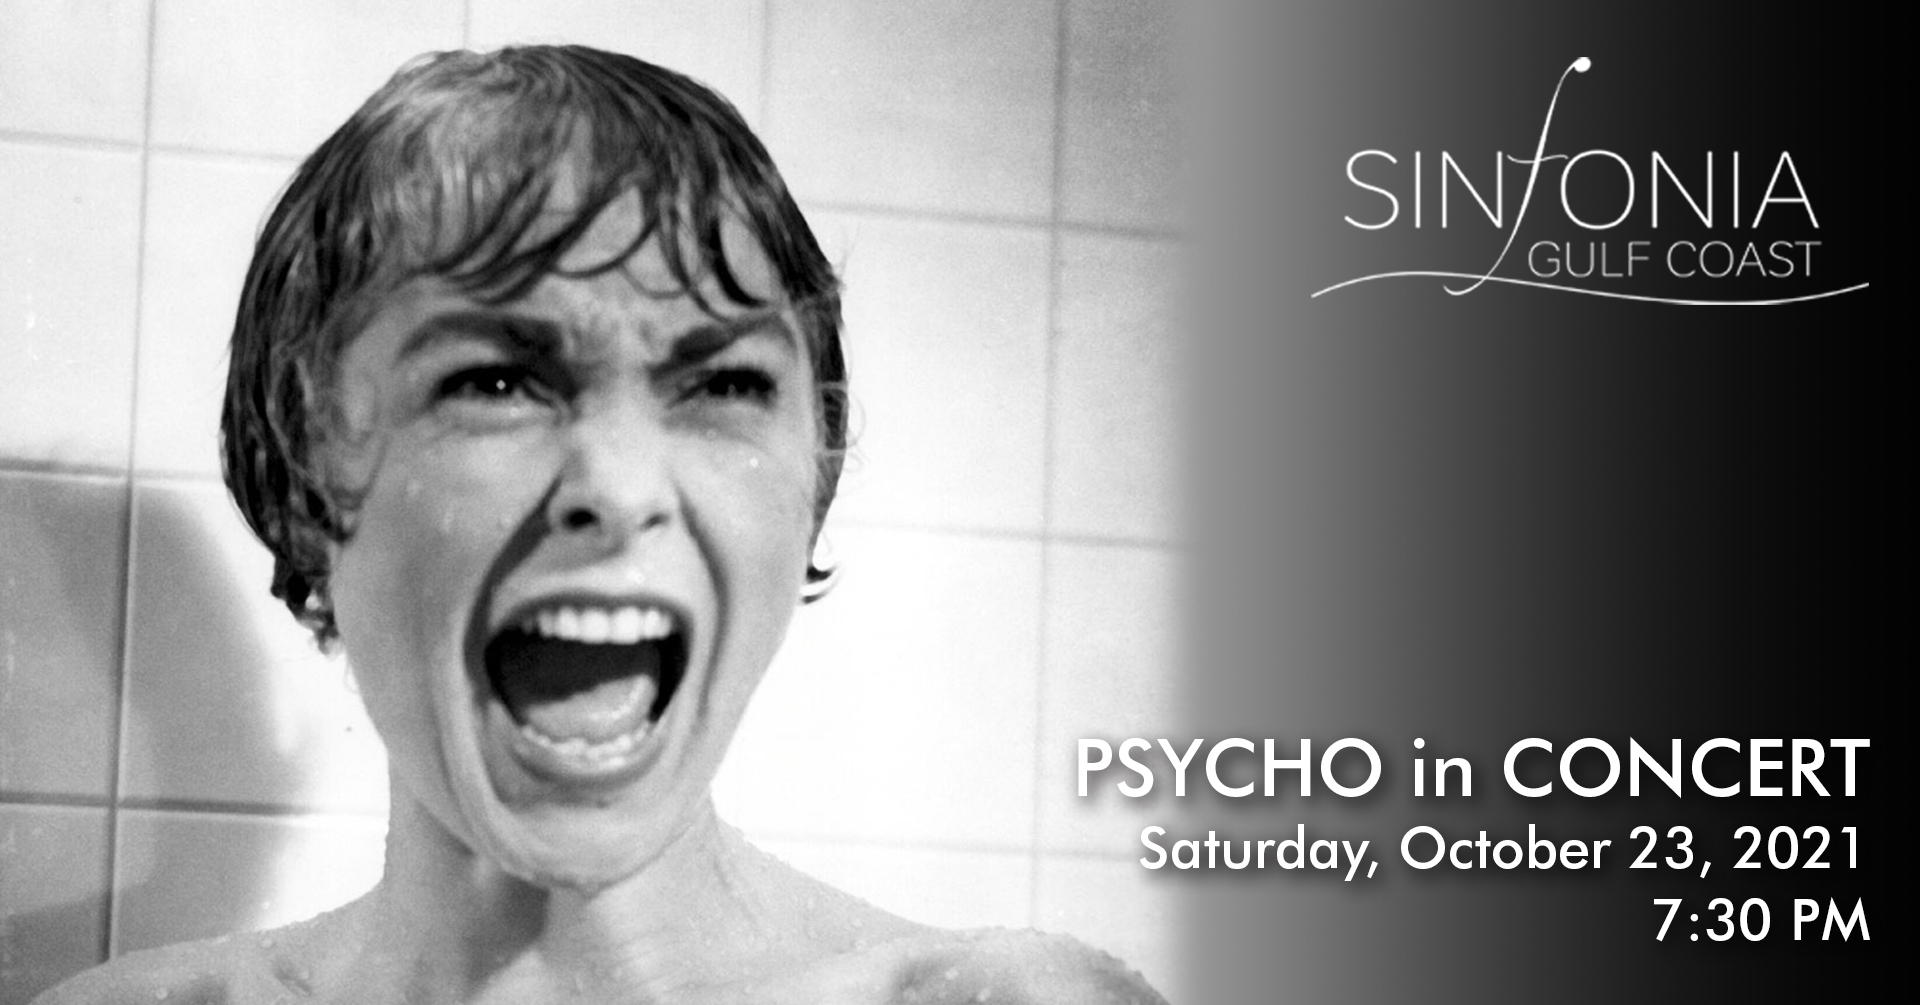 Psycho: Film in Concert featuring Sinfonia Gulf Coast